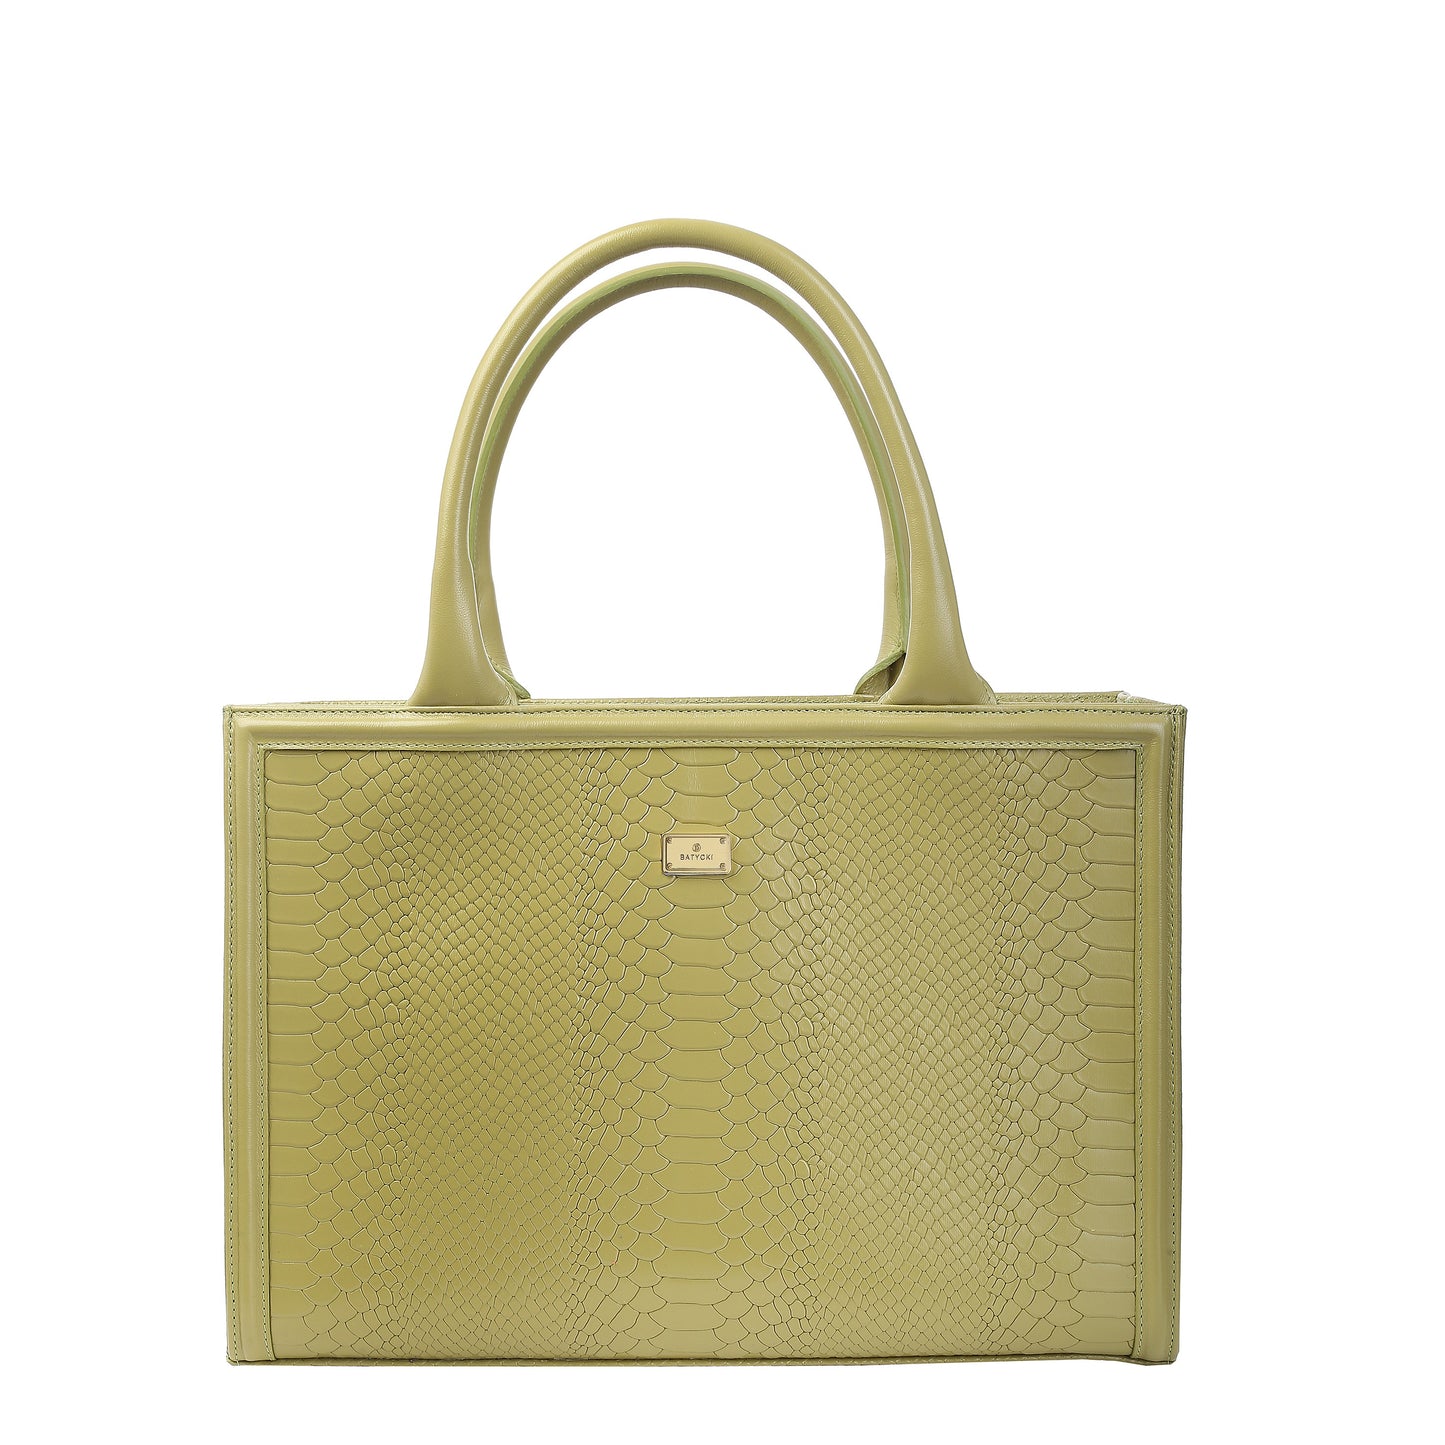 ANA OLIVE women's leather handbag